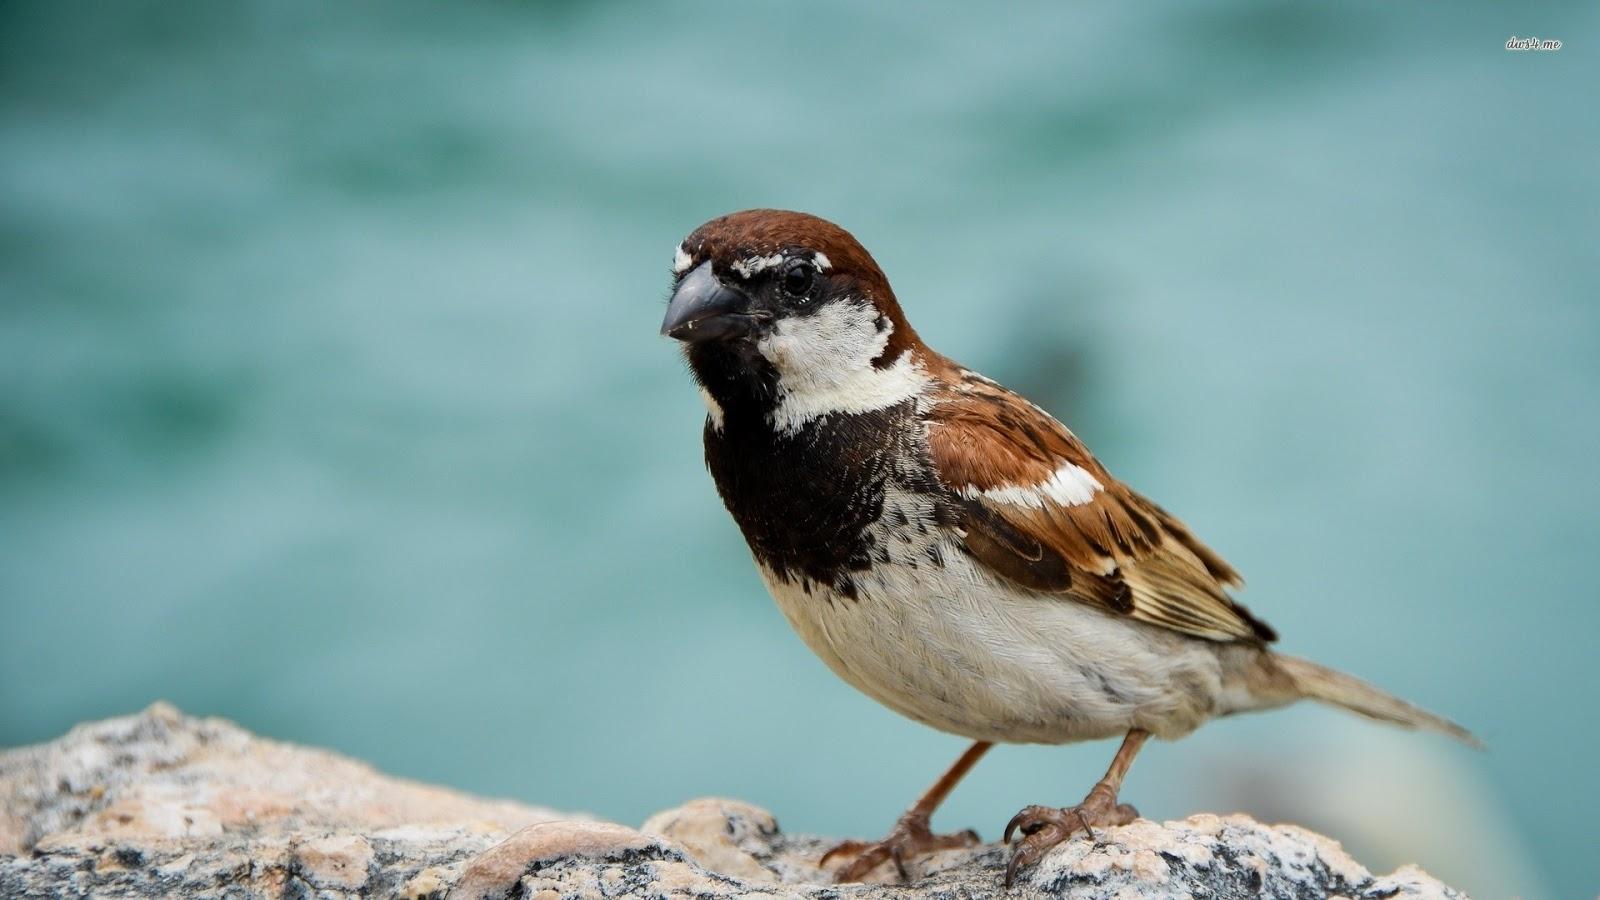 Sparrow. Sparrow HD Wallpaper. Sparrow Picture. Sparrow Photo